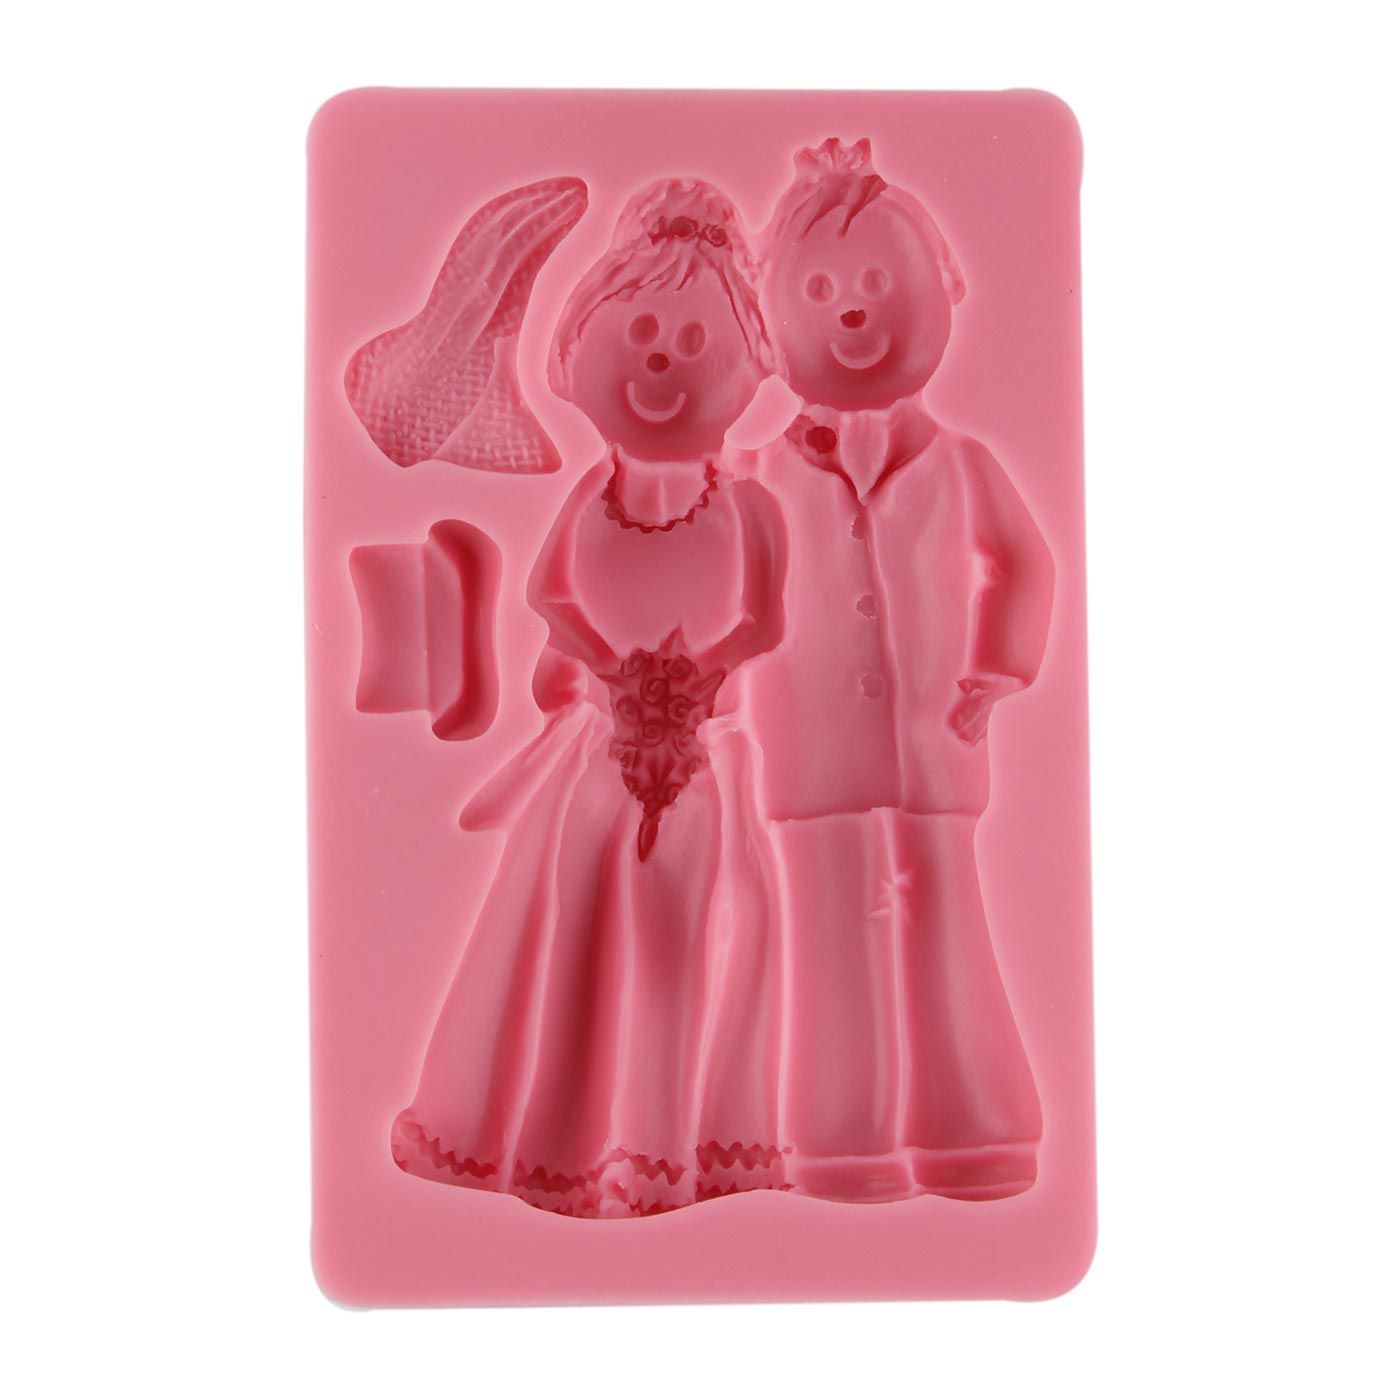 Delizioso Wedding Couple Silicon Pink Mold - 1